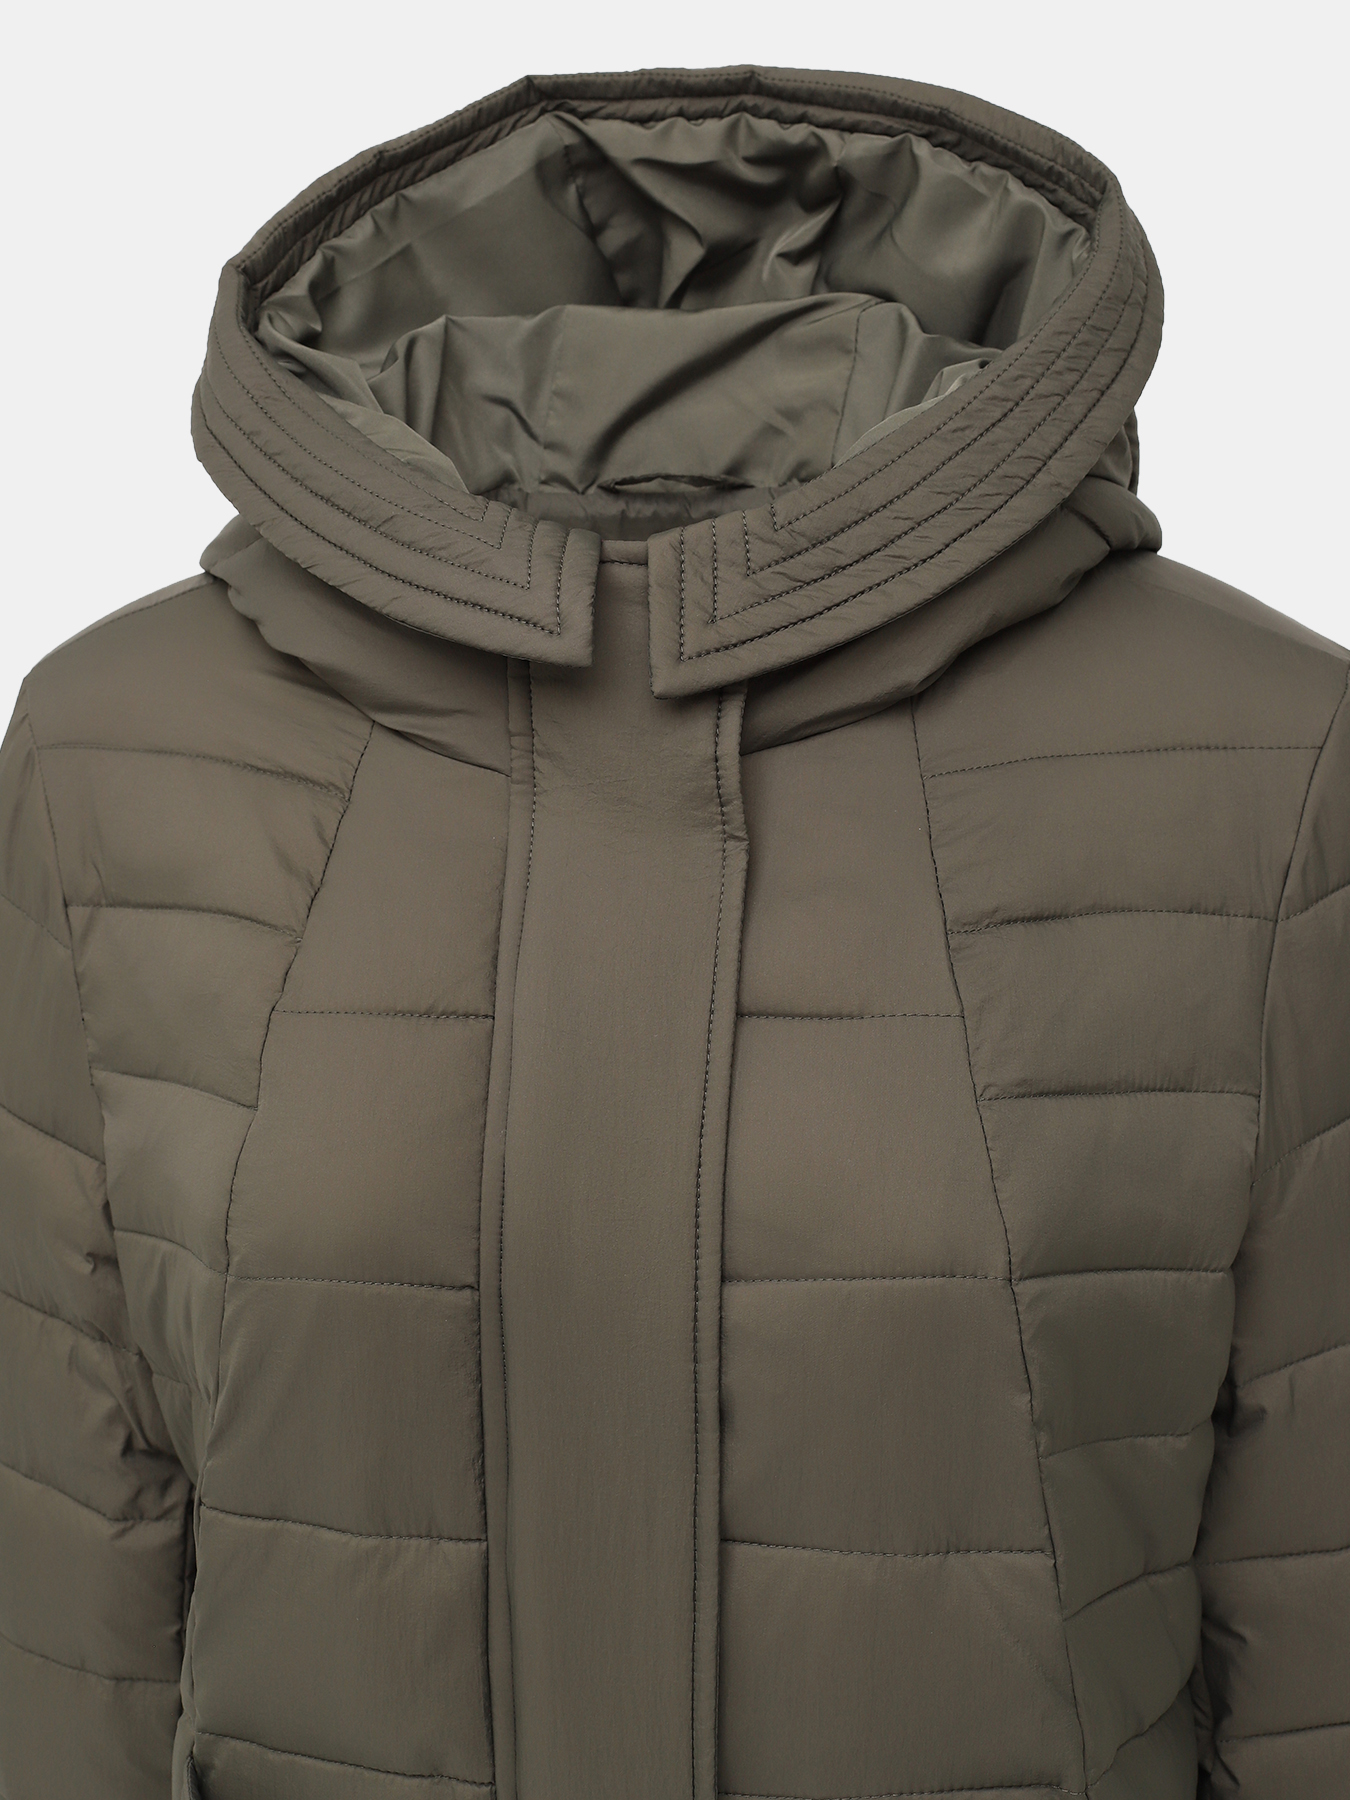 Пальто зимнее Alessandro Manzoni Purpur 384502-191, цвет хаки, размер 48-50 - фото 3